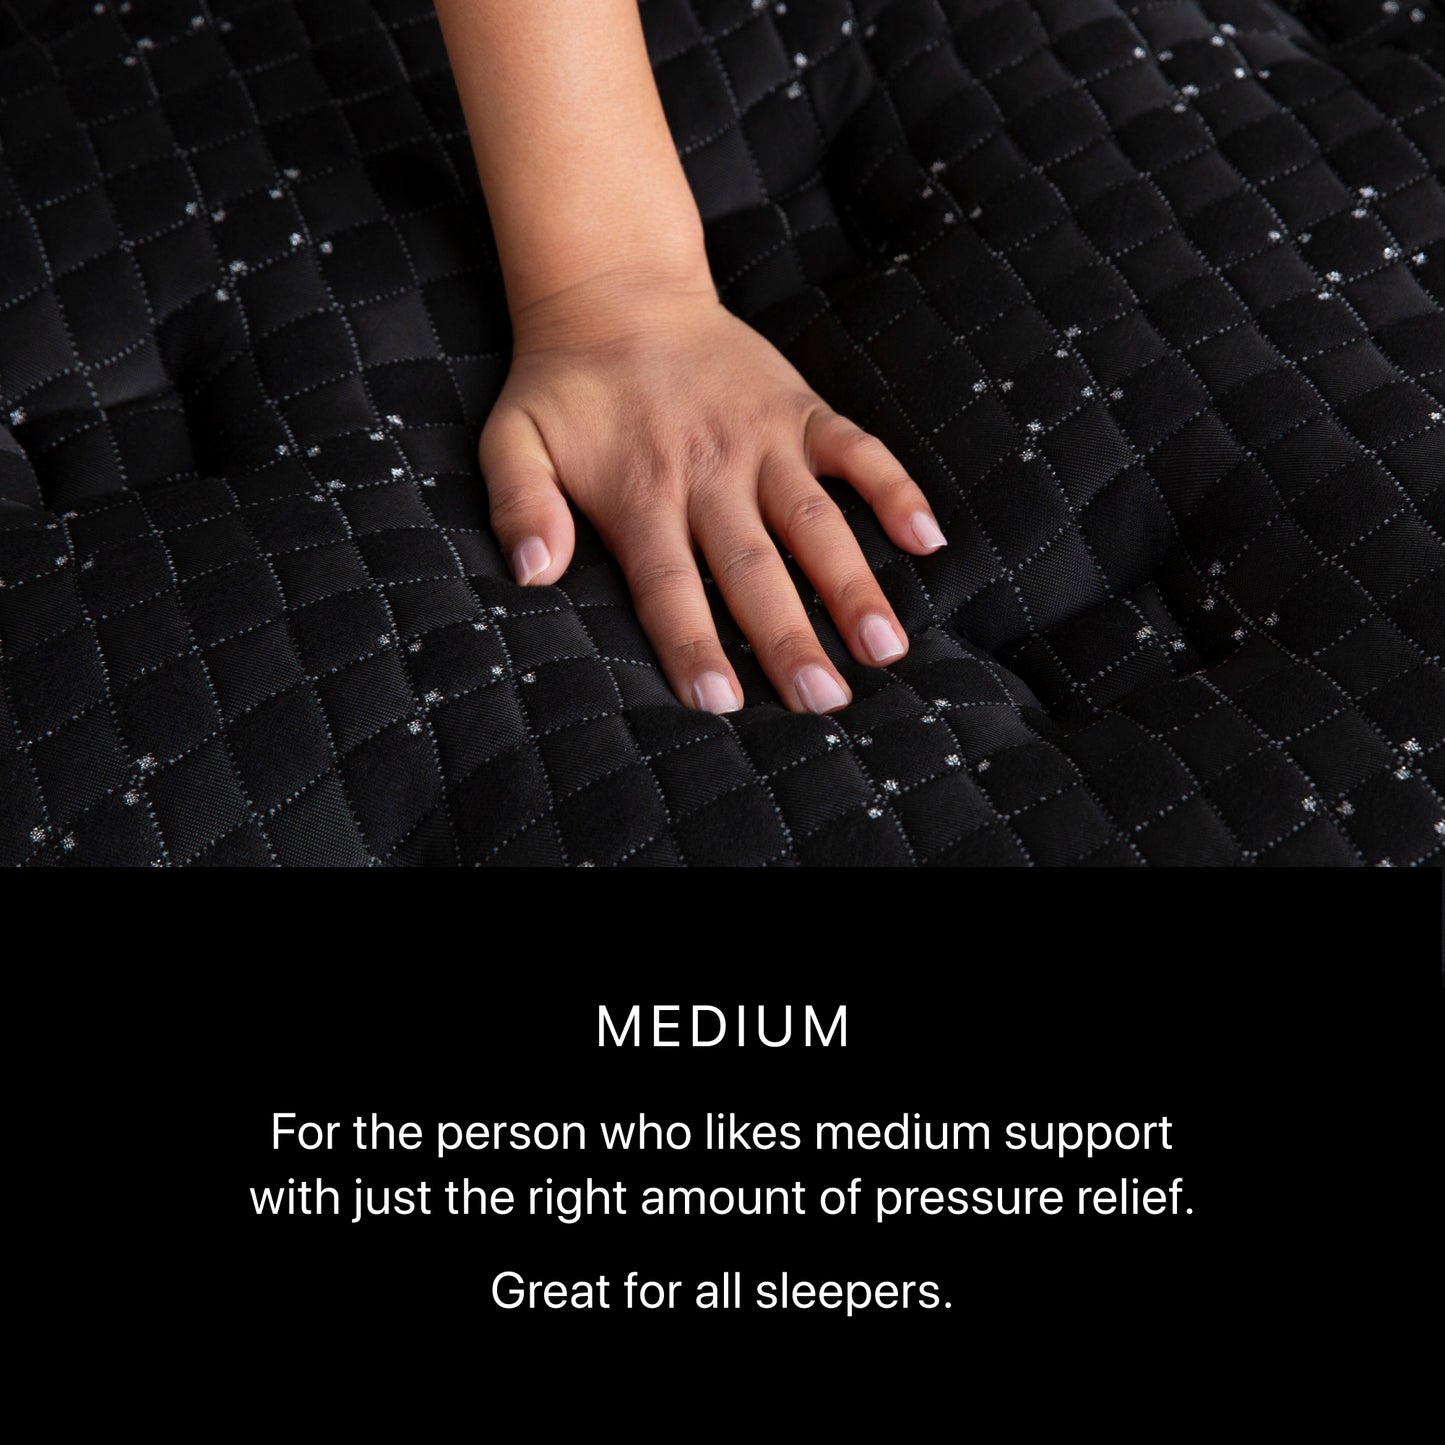 Beautyrest Black Series Three Medium Mattress - Comfort Level Image